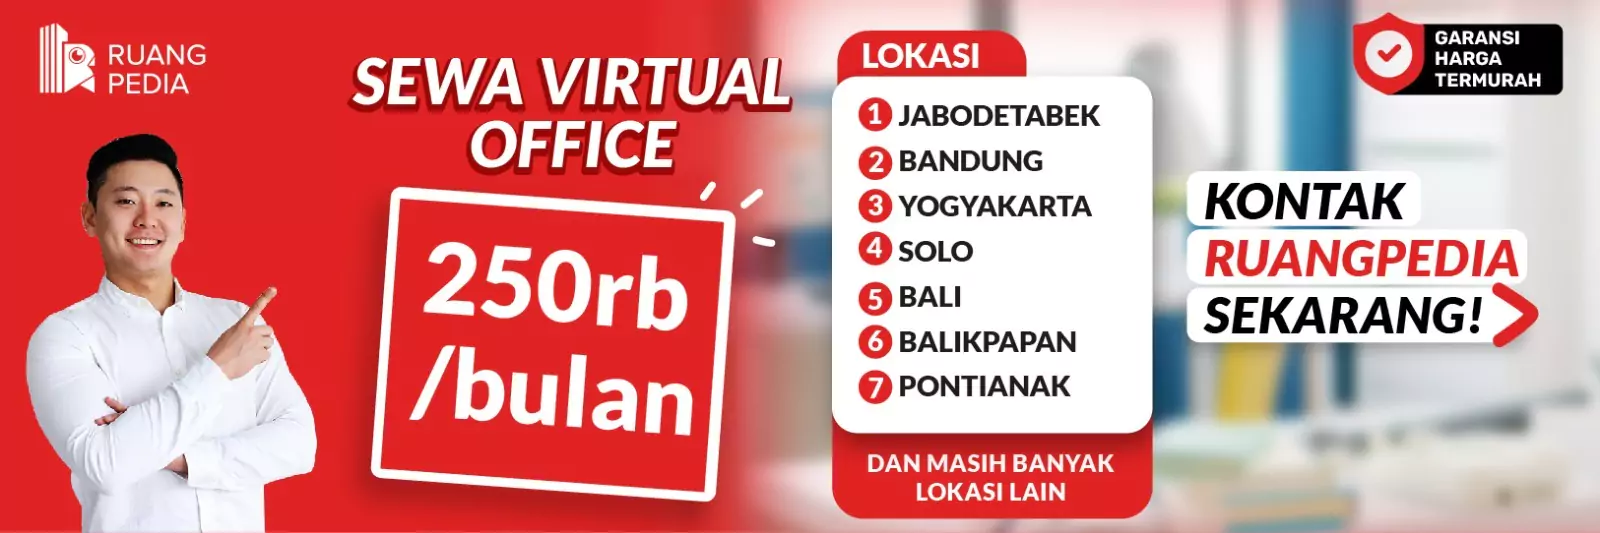 Foto Virtual Office